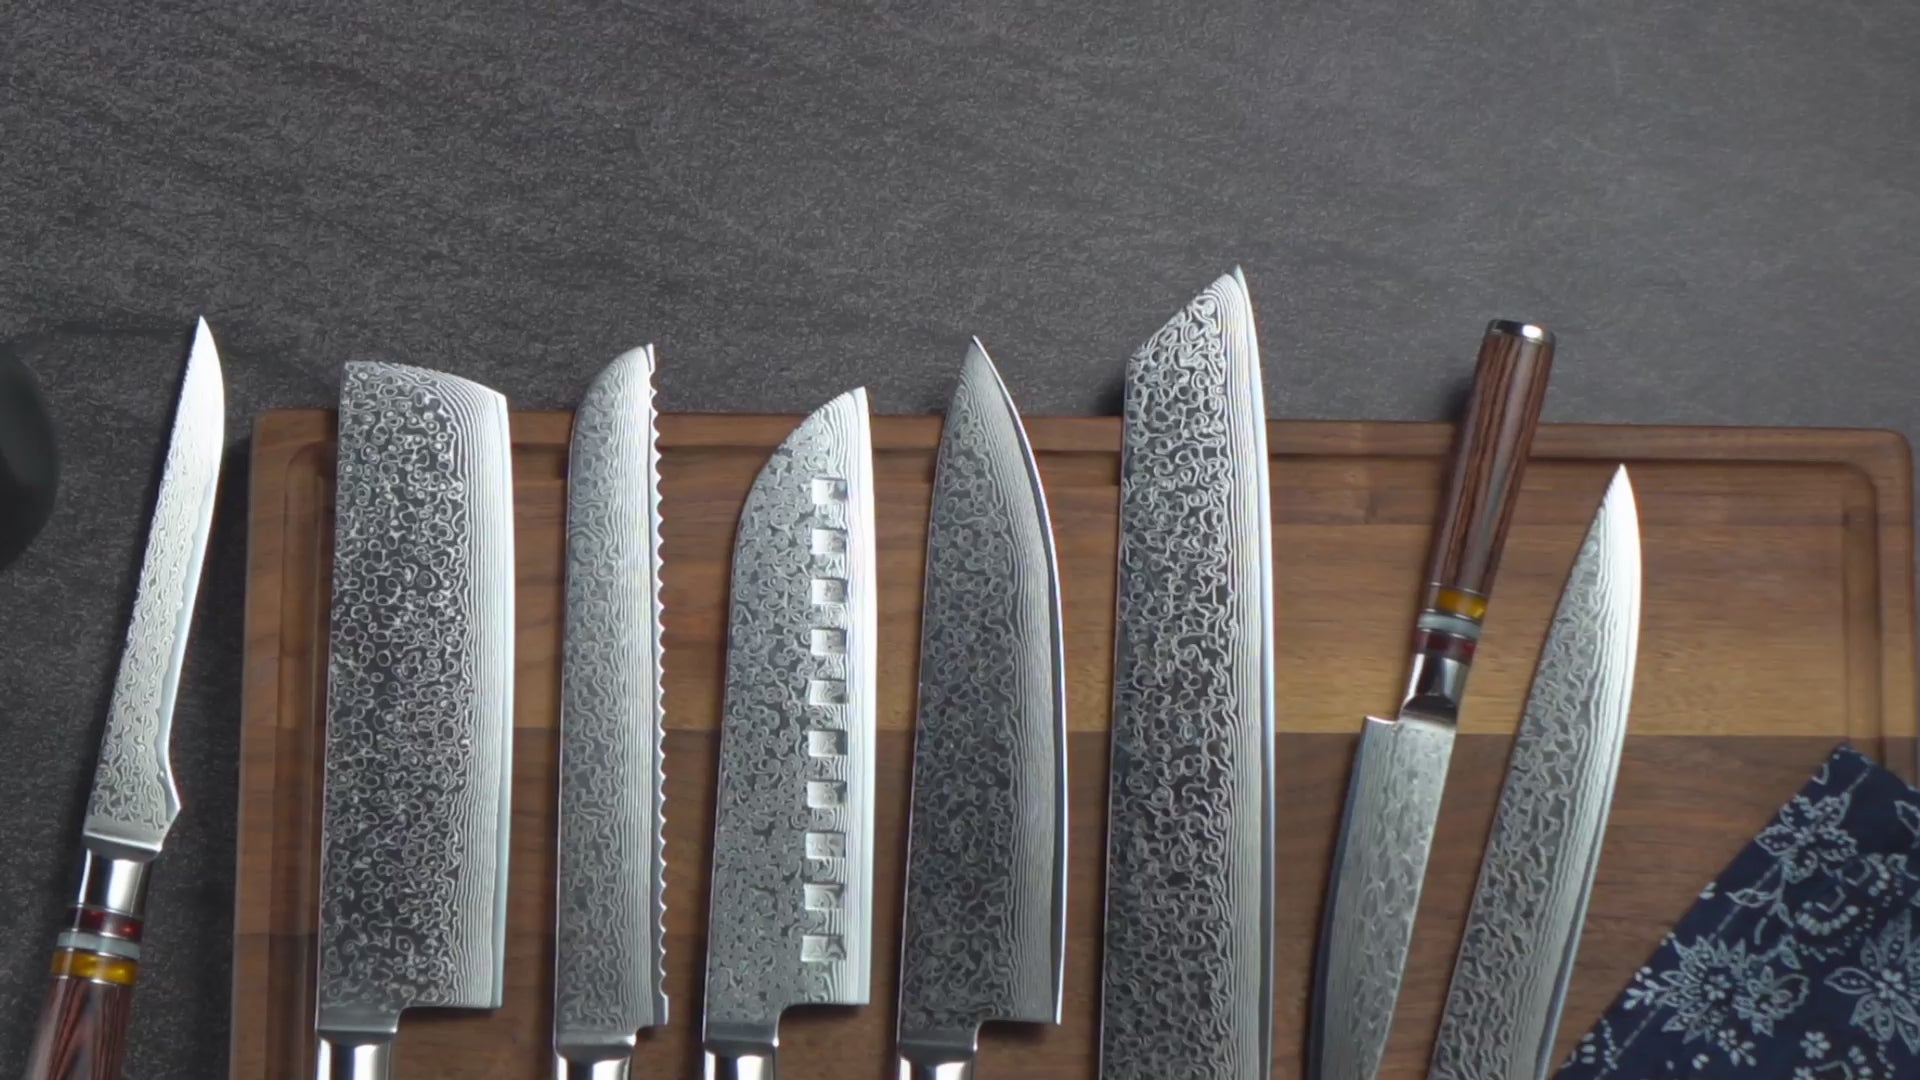 Handmade Chef Knife Set Japanese Kiritsuke Santoku Kitchen Knife